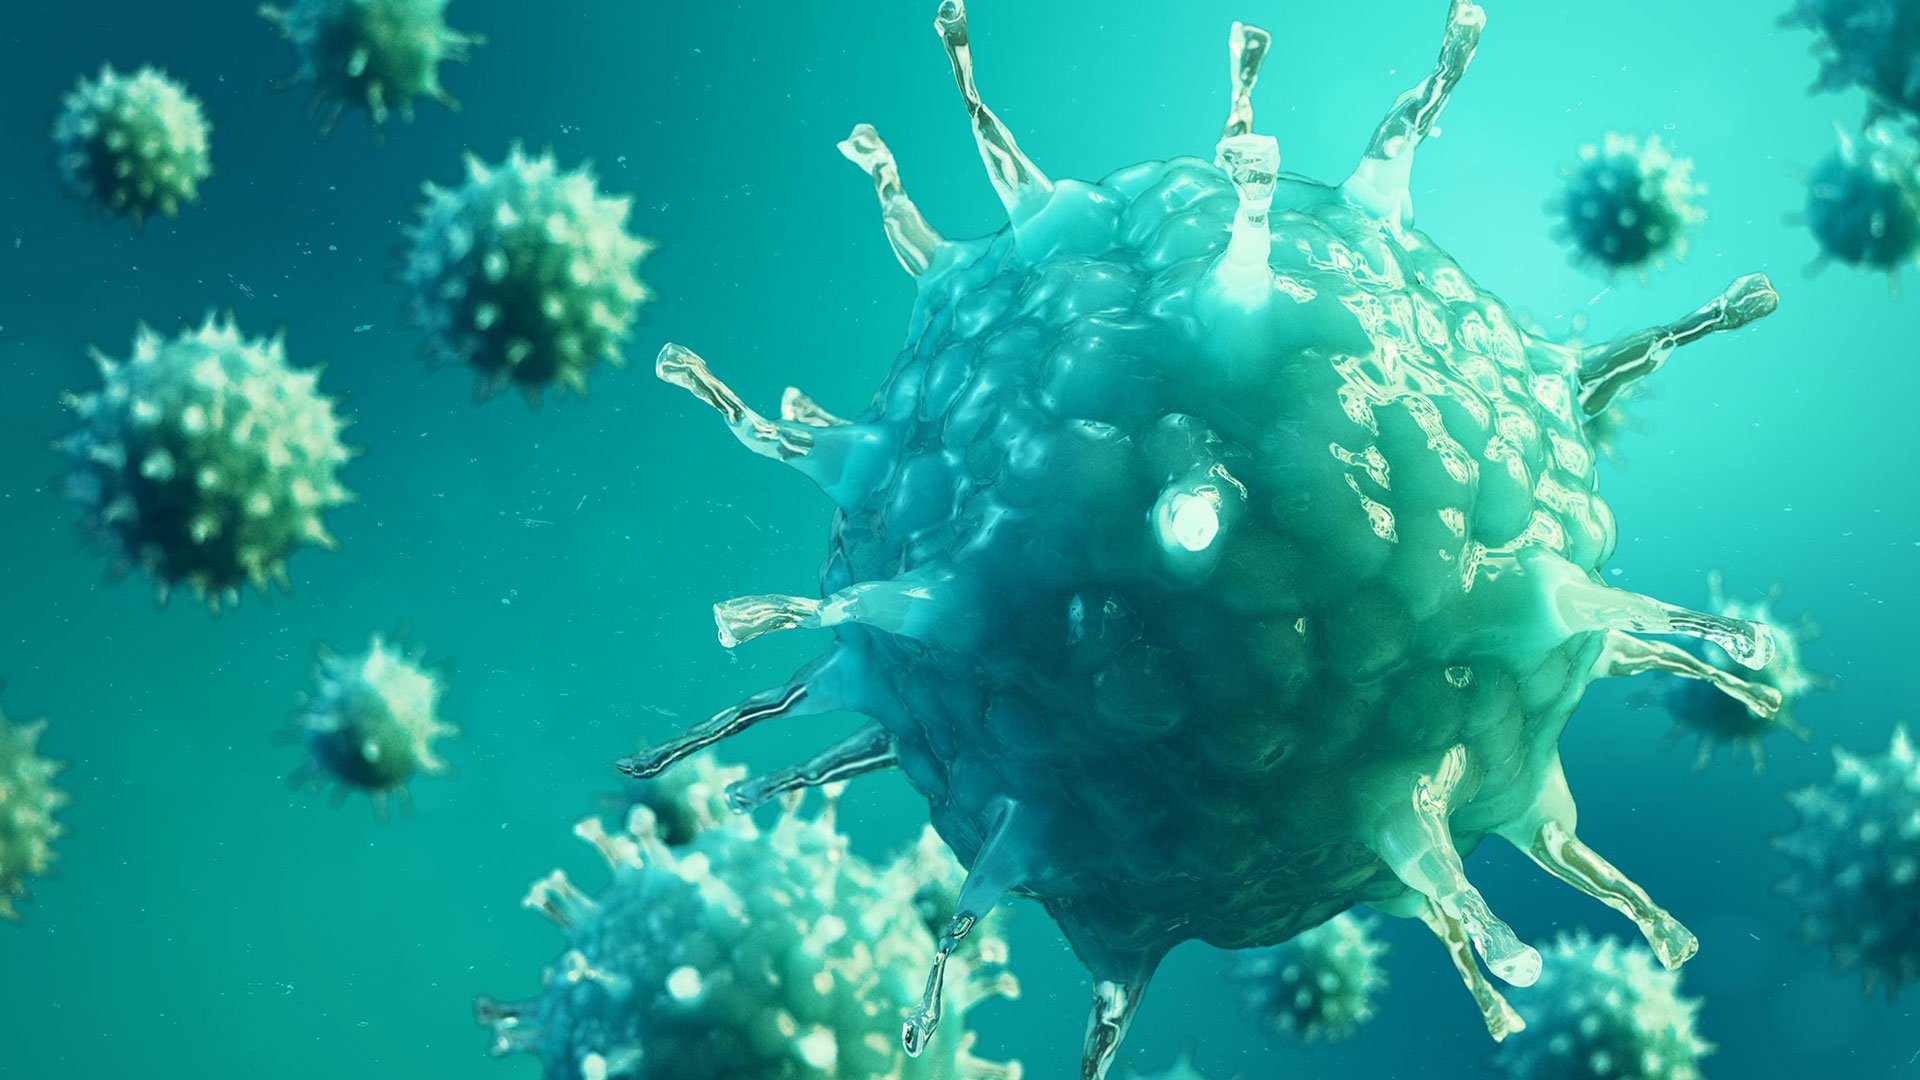 Coronavirus Fears: Will My Company be Affected?